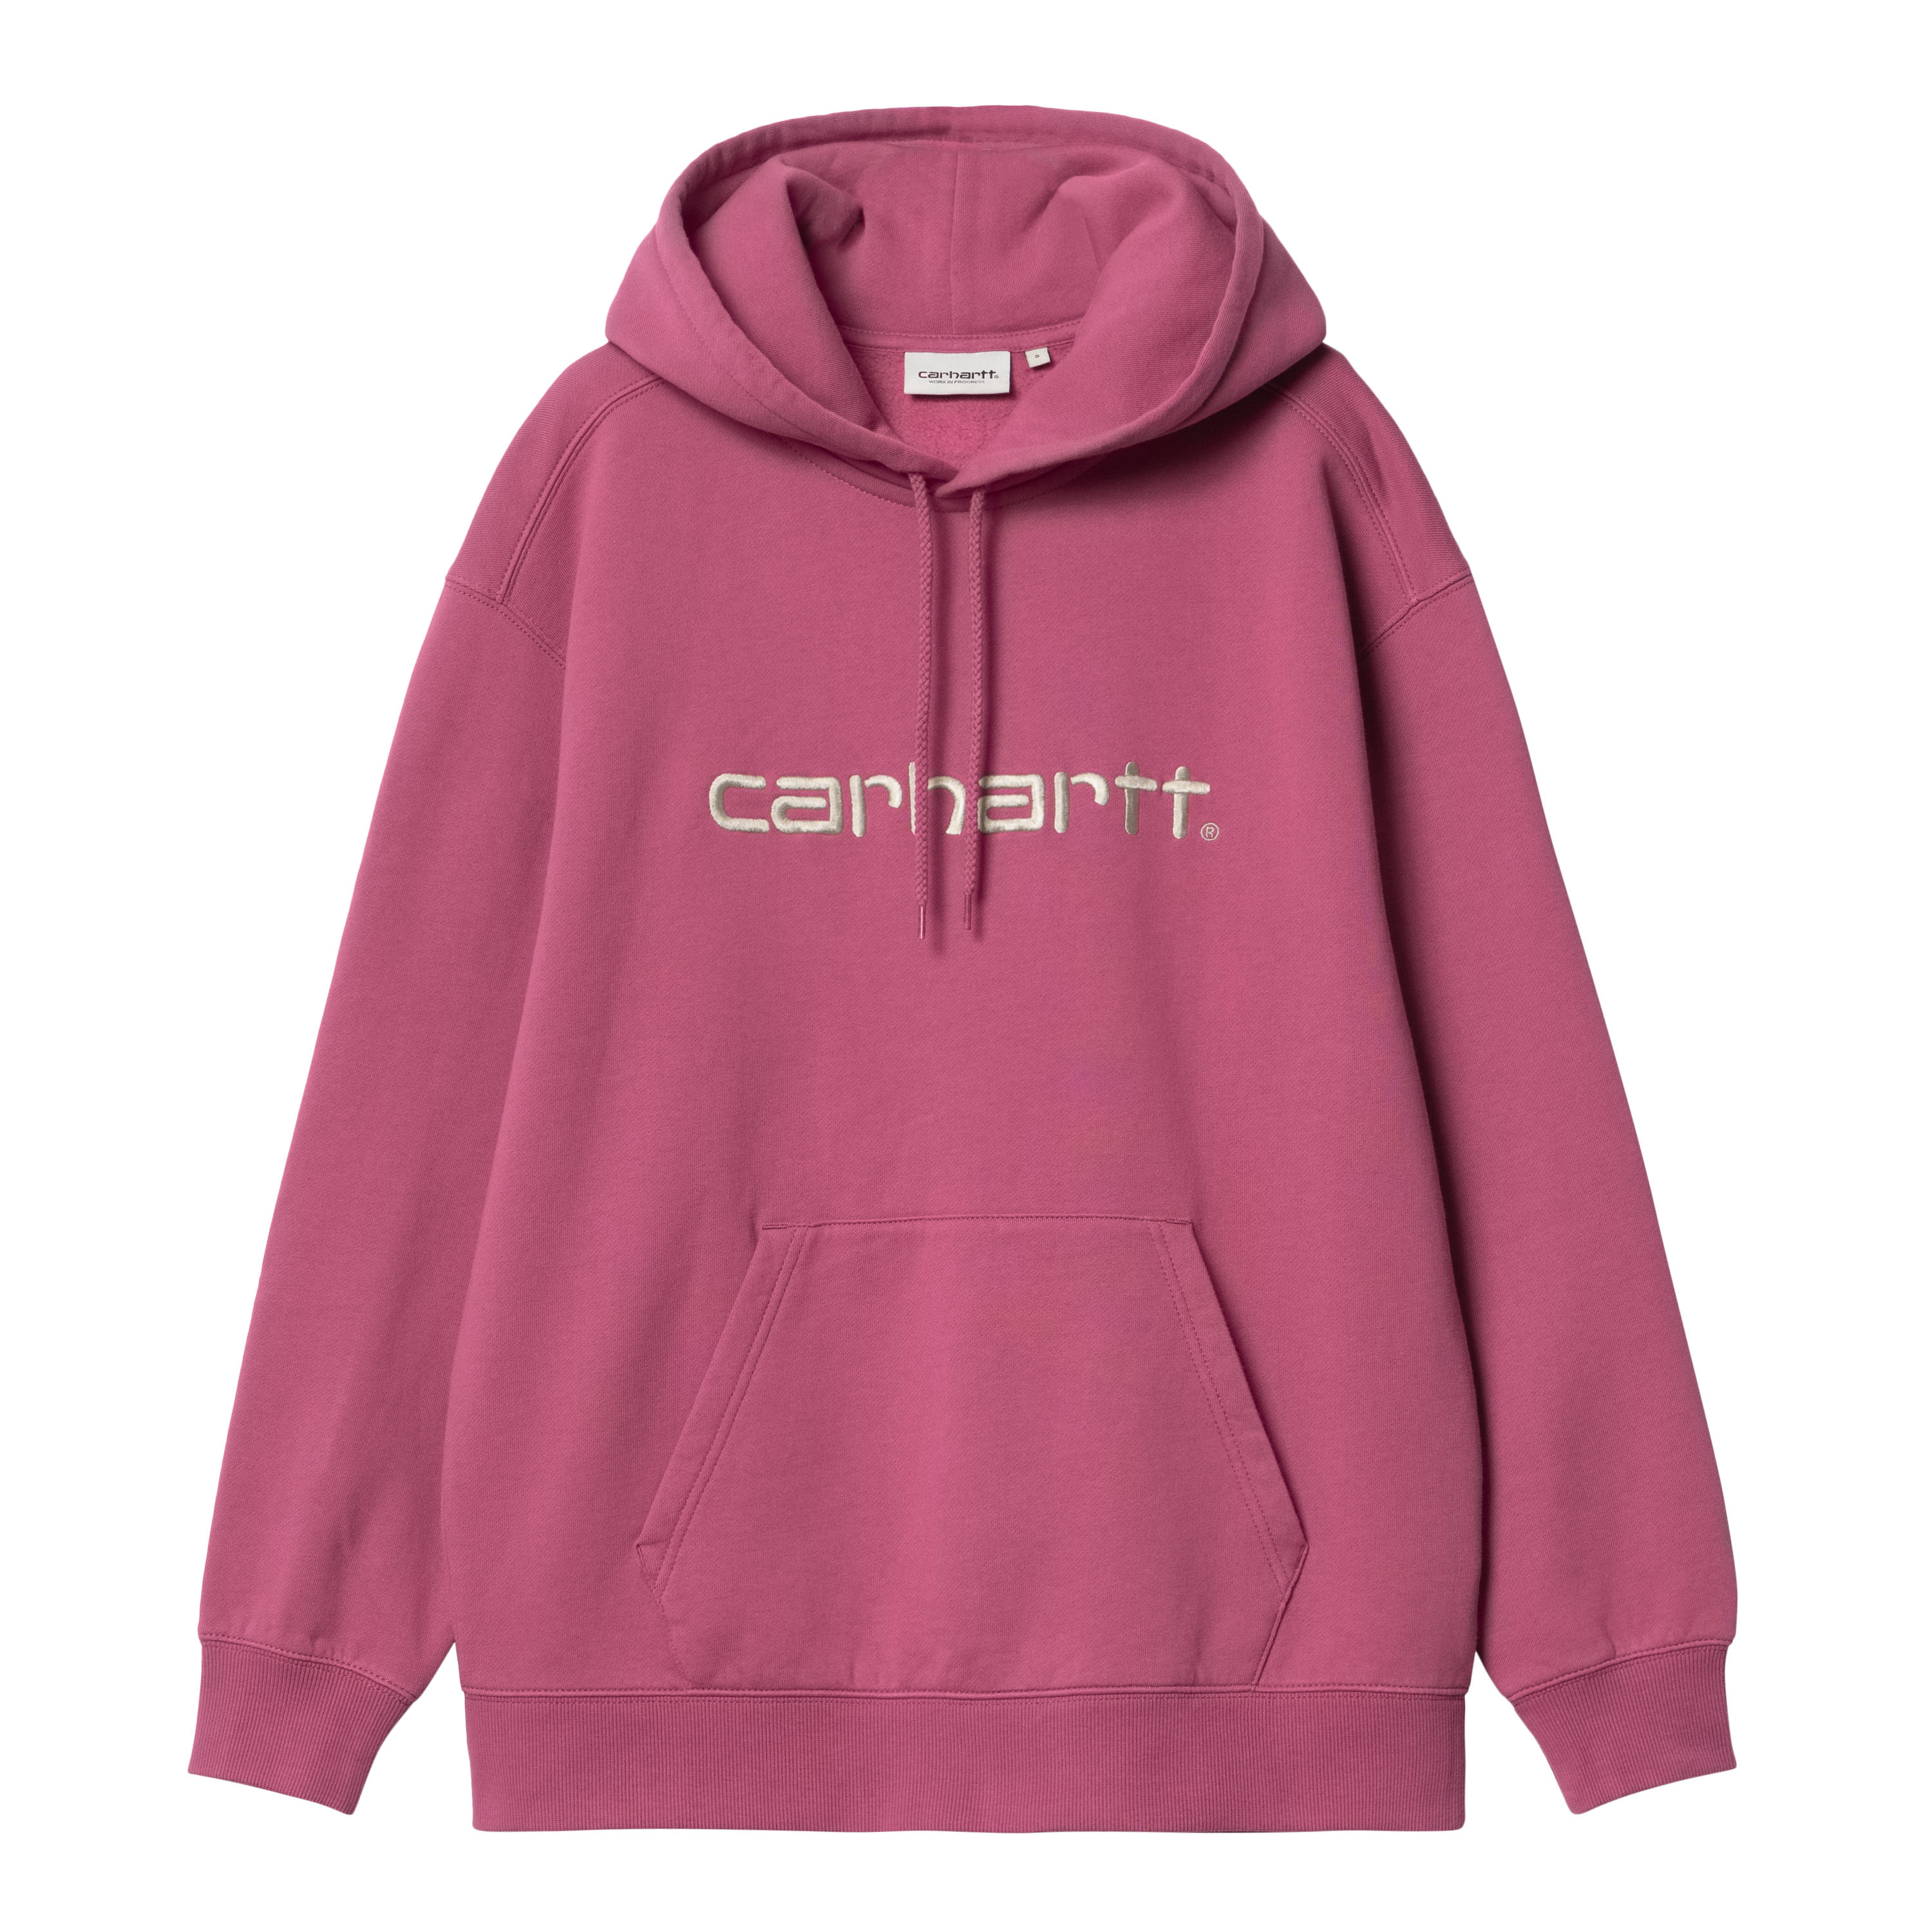 Carhartt WIP Women’s Hooded Carhartt Sweatshirt in Pink